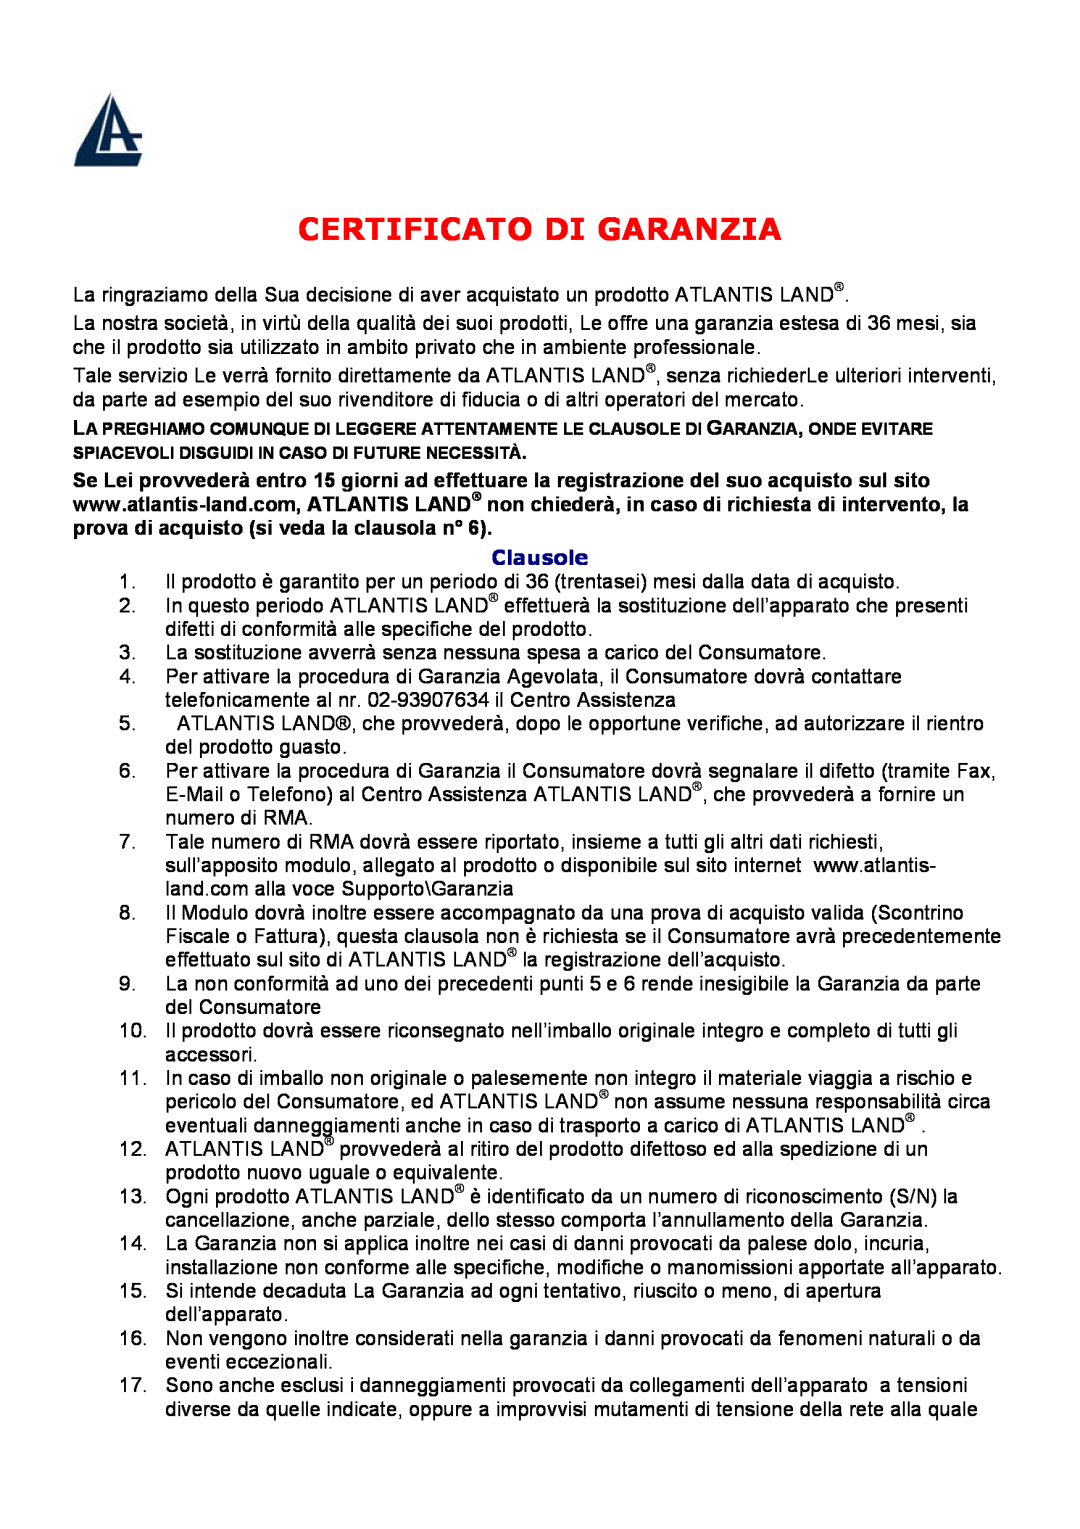 Atlantis Land A04-WI1102, A04-WI2202, A04-W1302 manual Certificato Di Garanzia, Clausole 